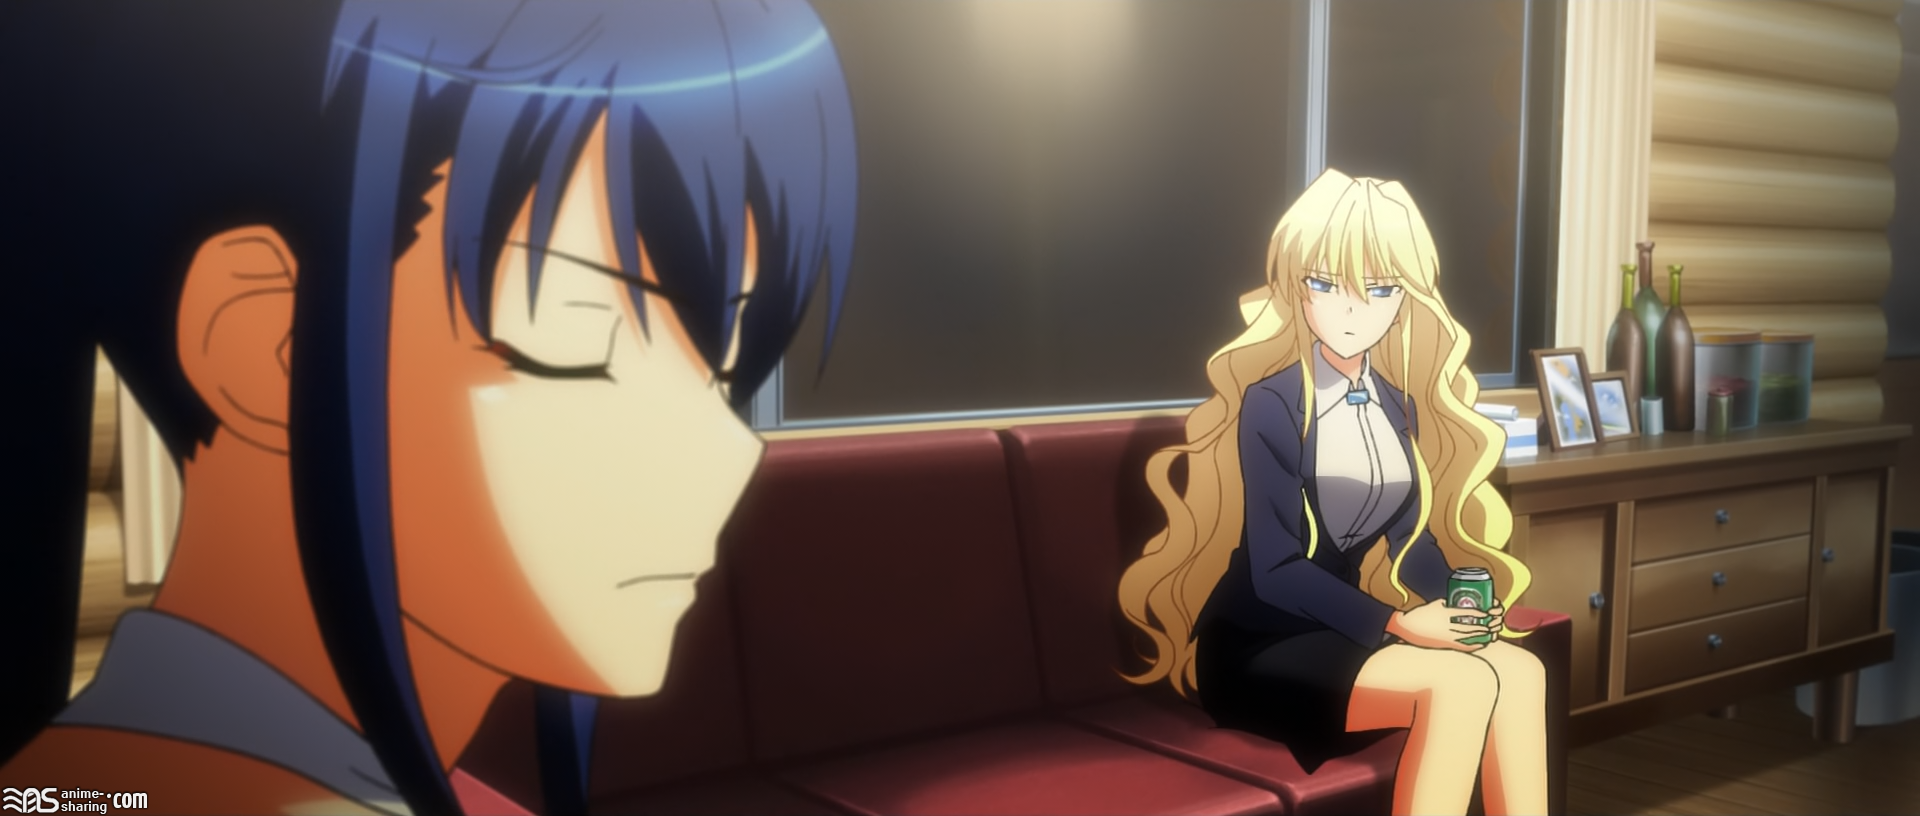 Spoilers] Grisaia no Rakuen - Episode 8 [Discussion] : r/anime